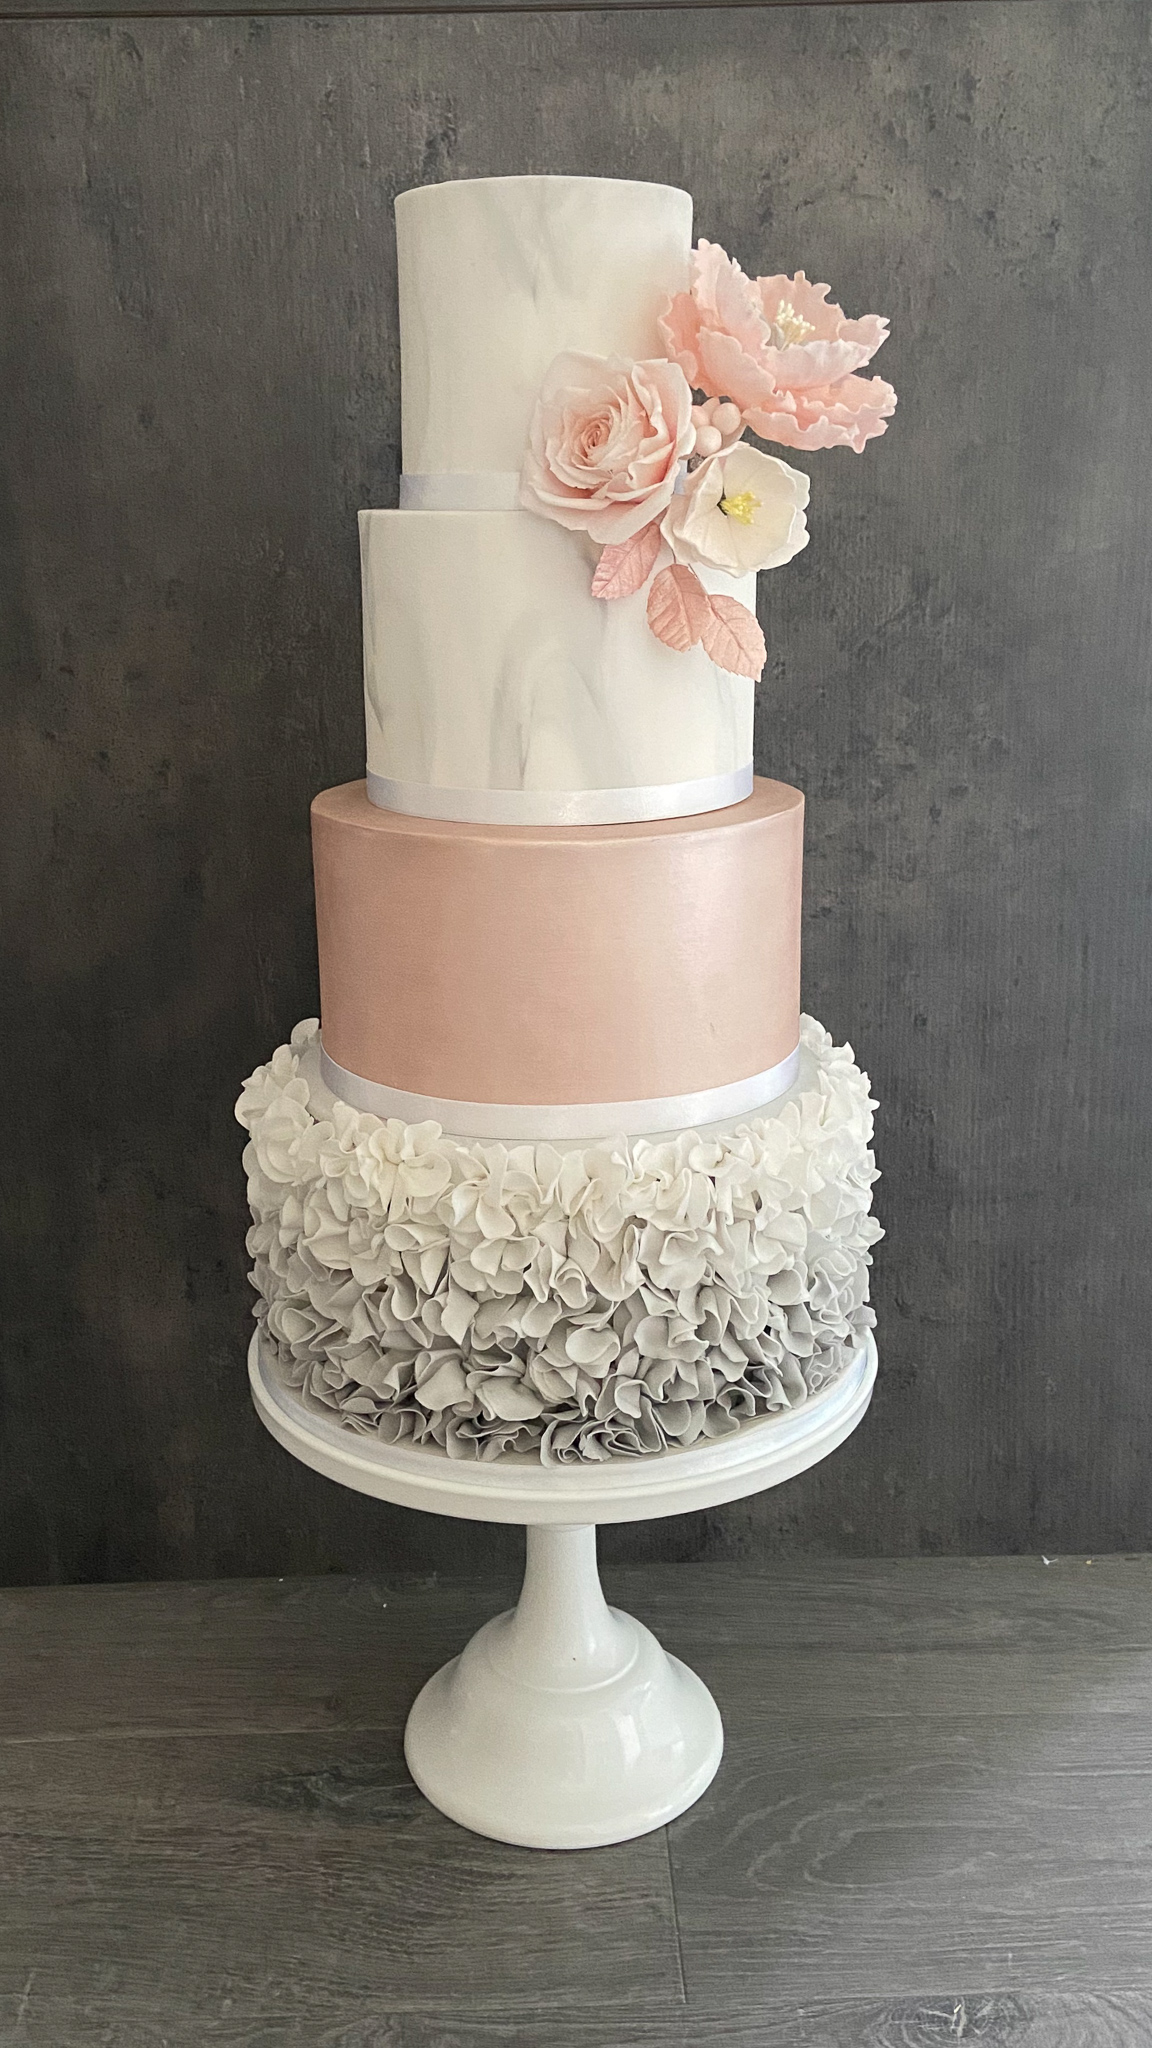 Ombre grey to white ruffles wedding cake four tier